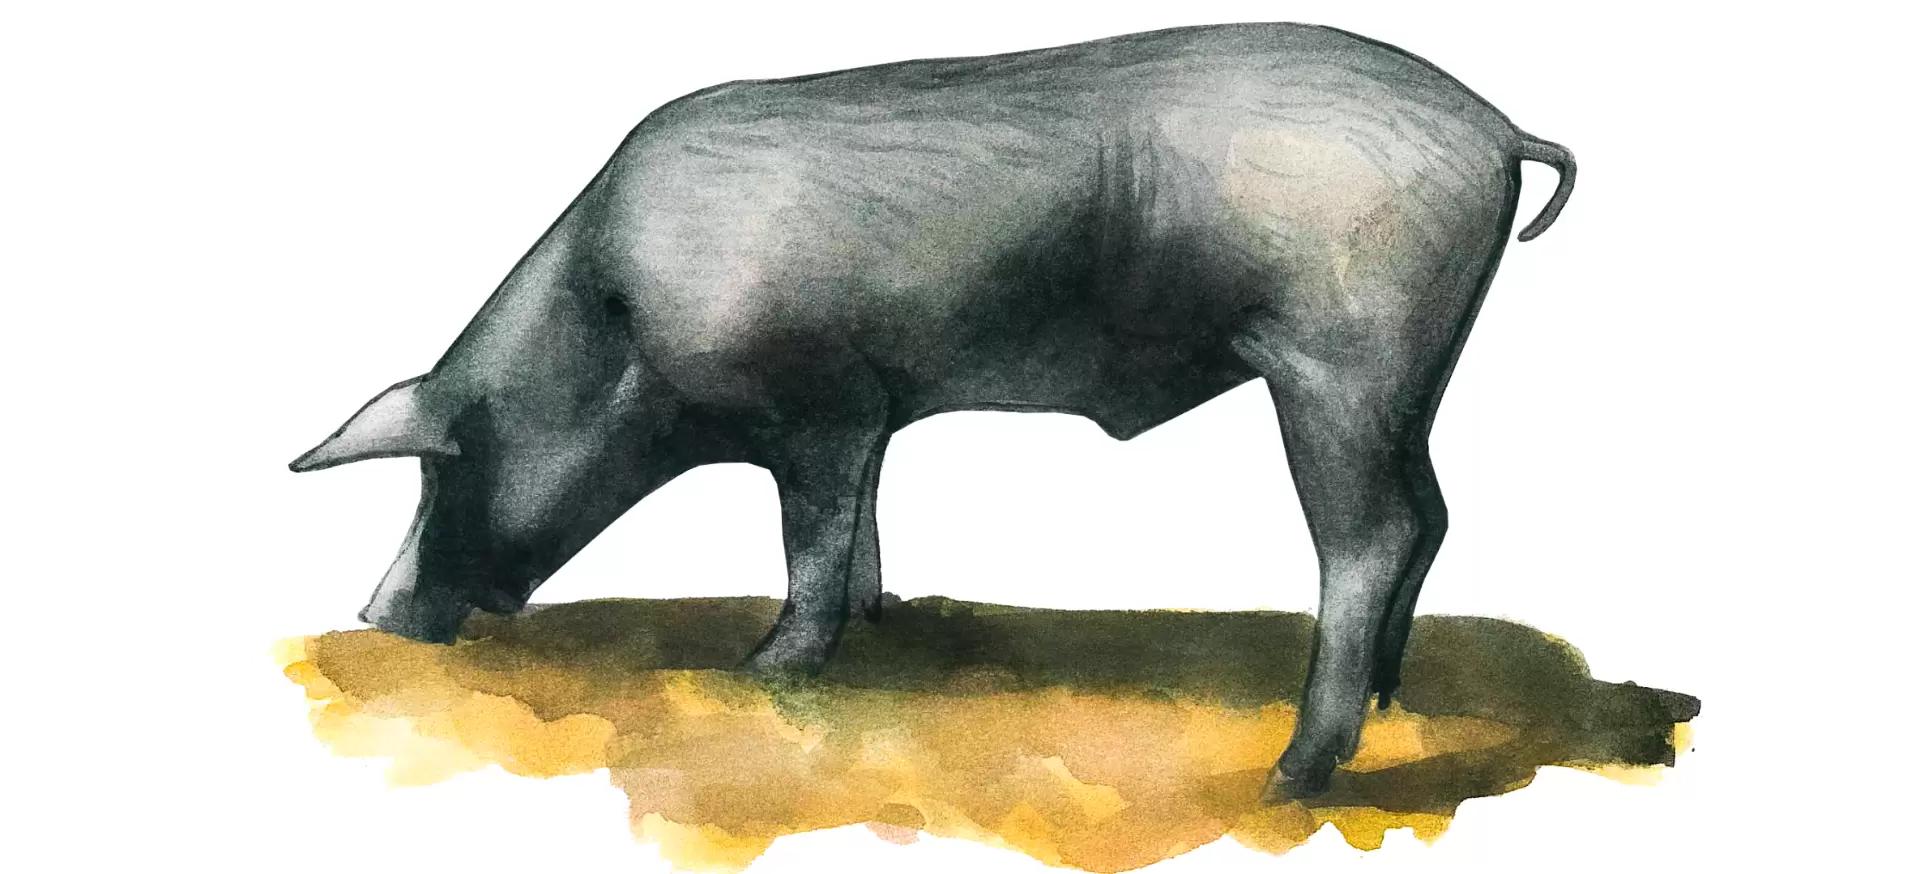 Моравка – порода свиней